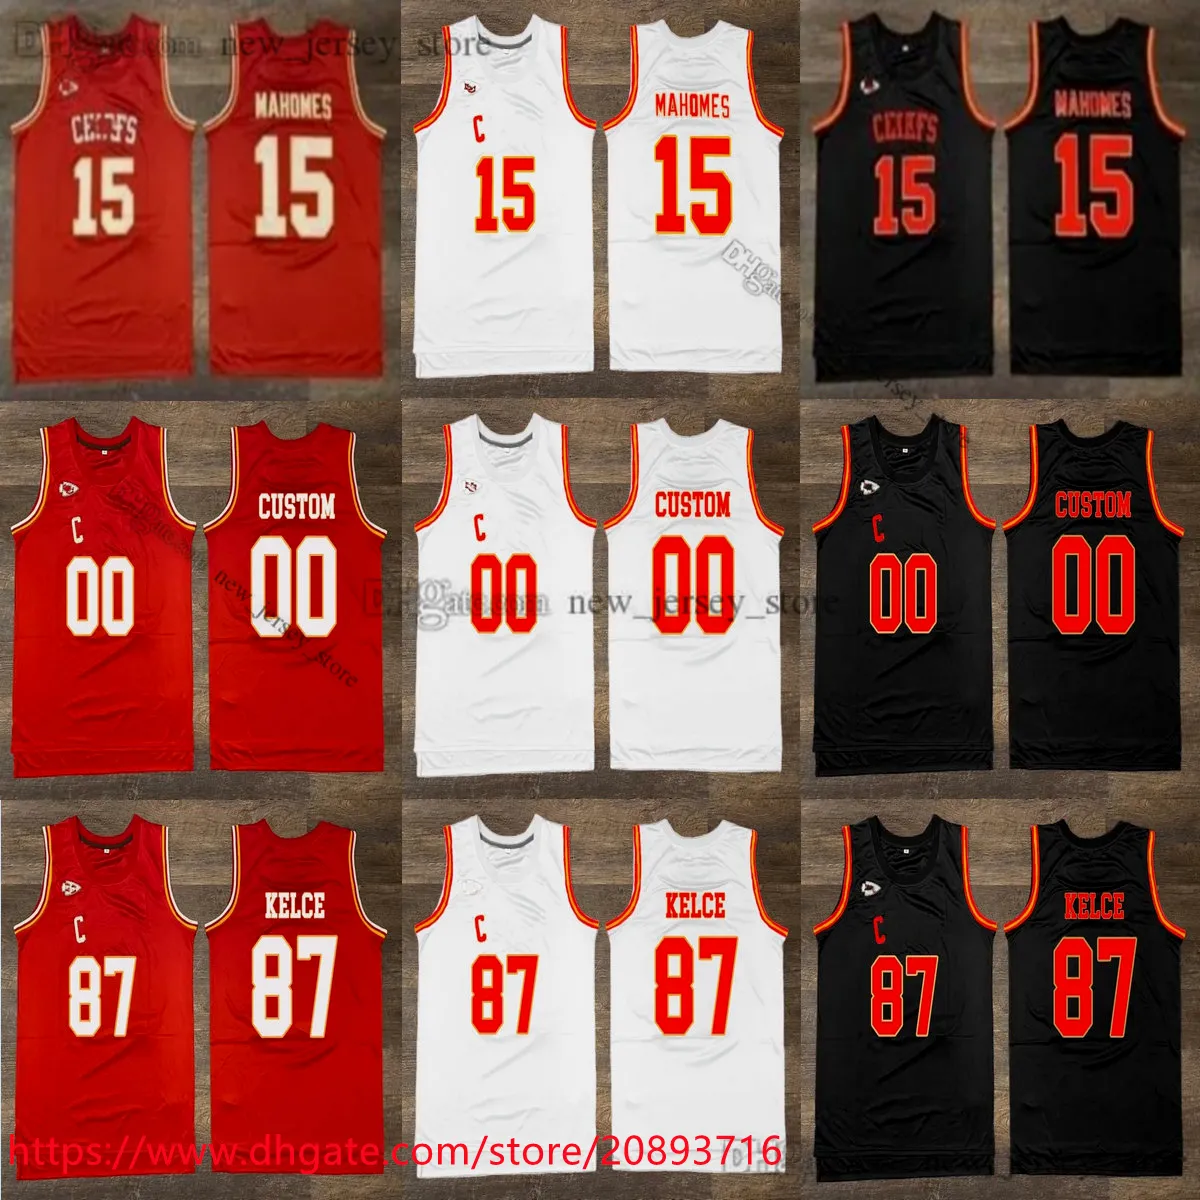 Custom S-6XL Basketball 15 Patrick Mahomes Jersey Stitched Red White Black 10 Isiah Pacheco 87 Travis Kelce Jerseys Shirts Man Women Youth Kids Boys